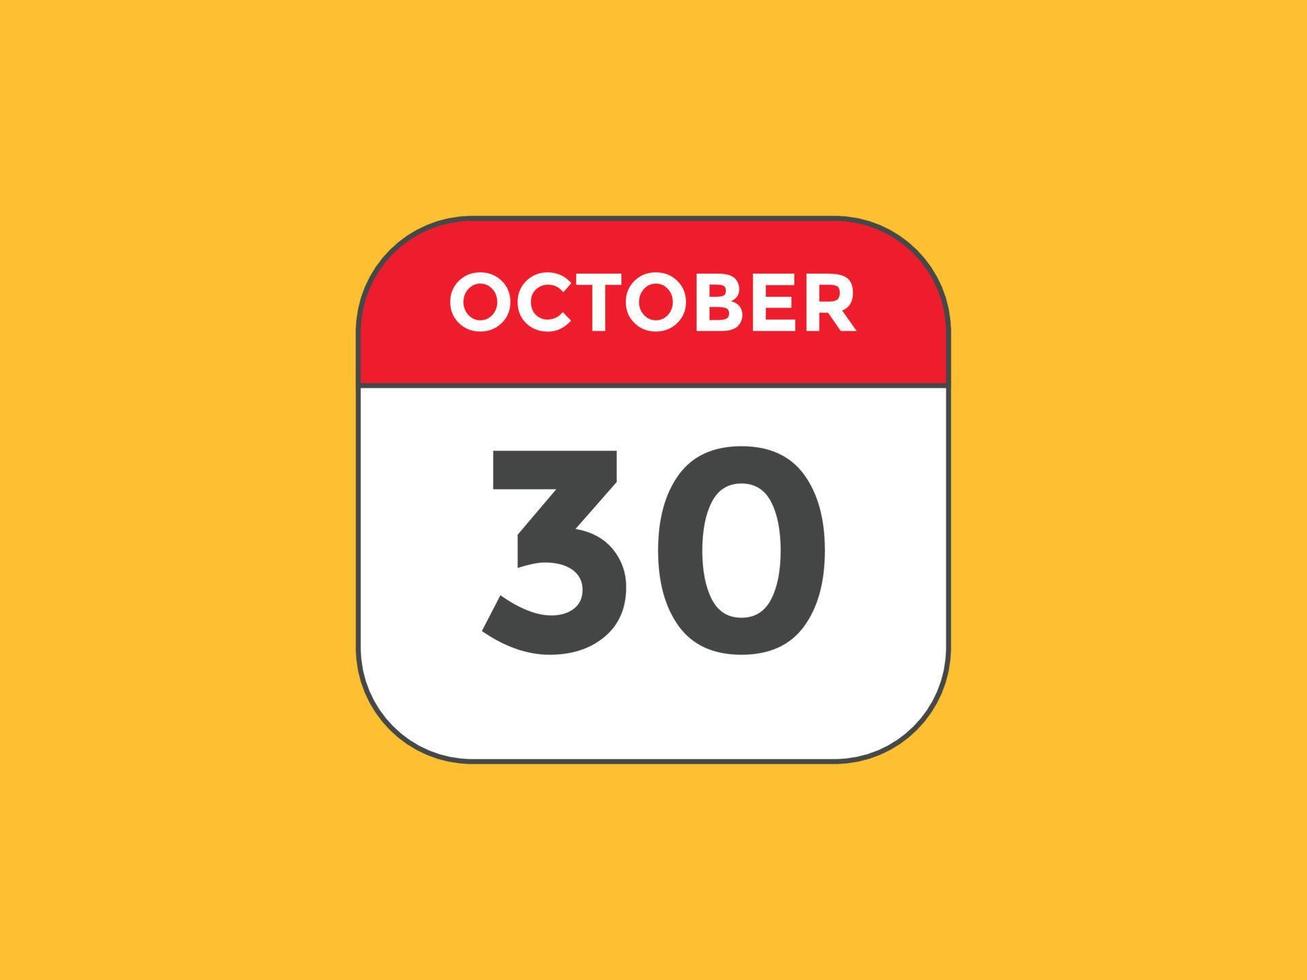 october 30 calendar reminder. 30th october daily calendar icon template. Calendar 30th october icon Design template. Vector illustration